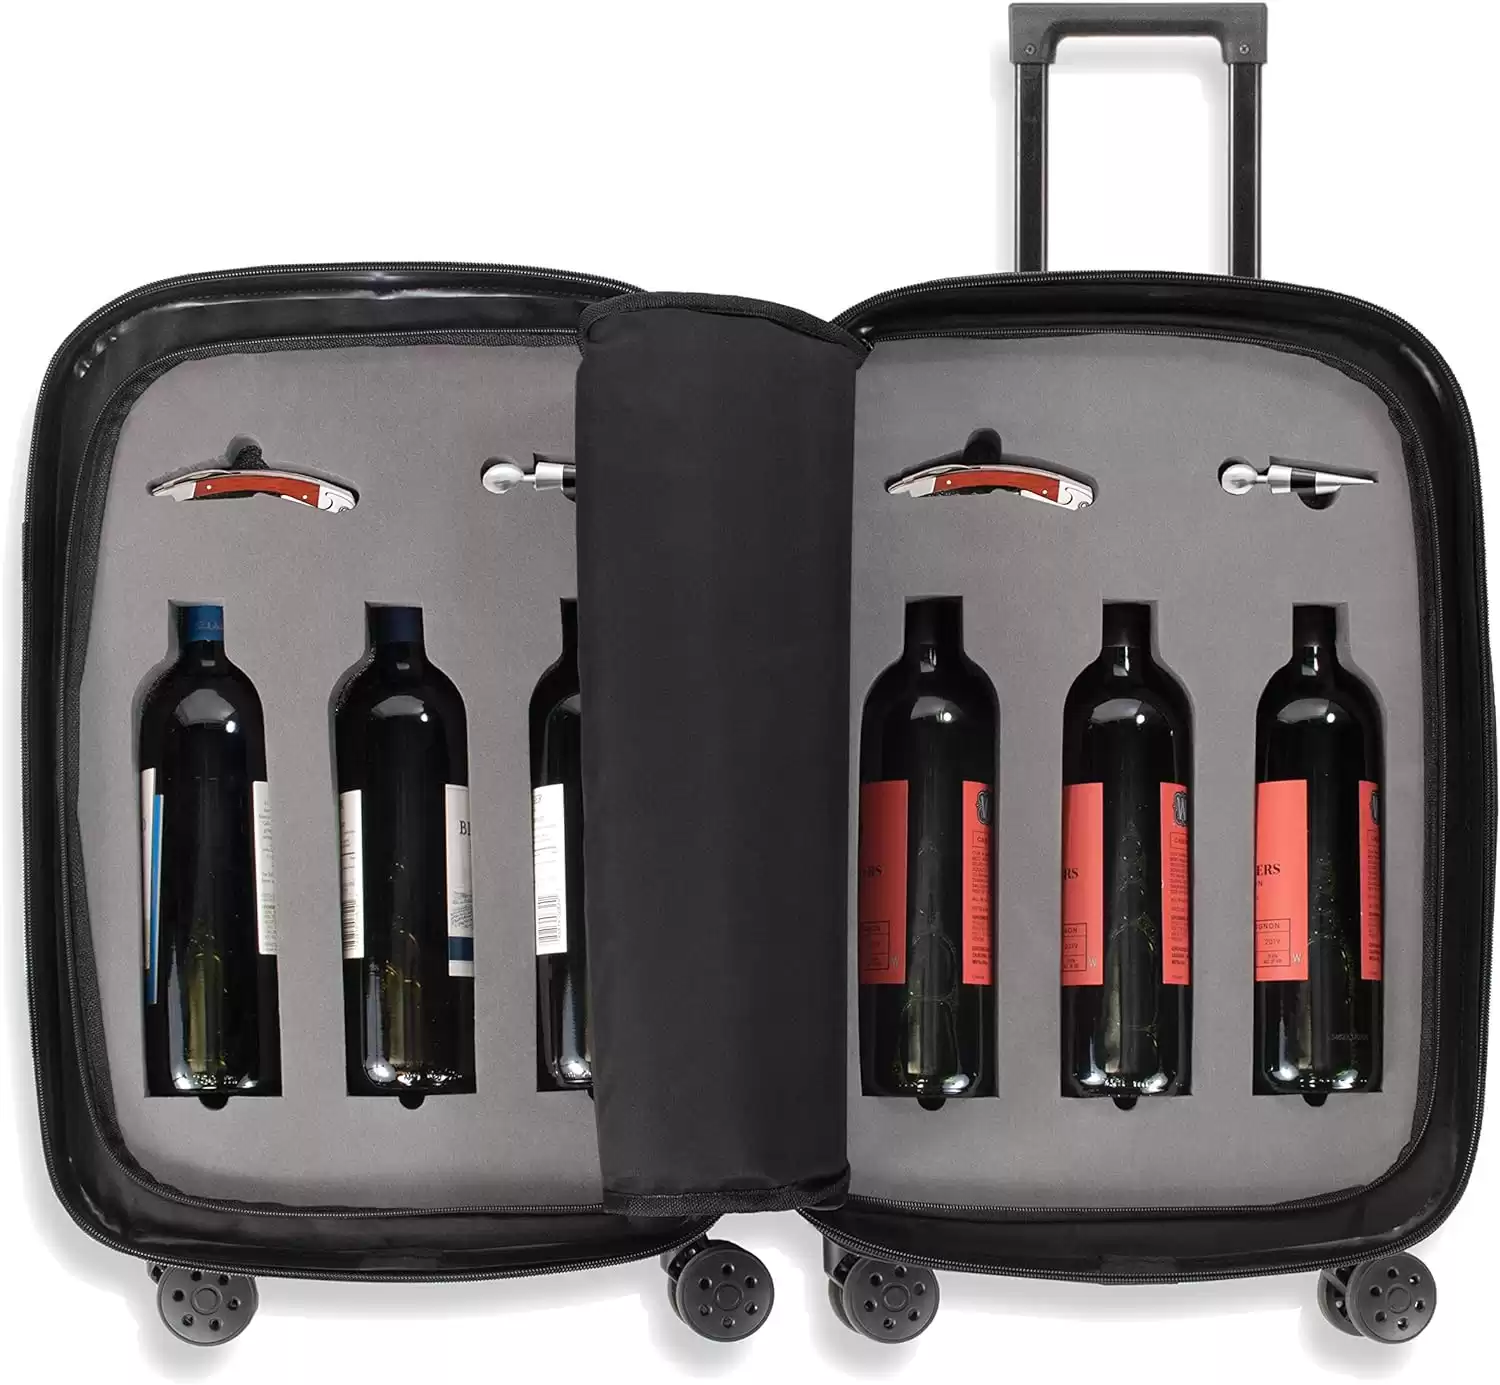 Vino Via Wine Luggage For Six Wine Bottles